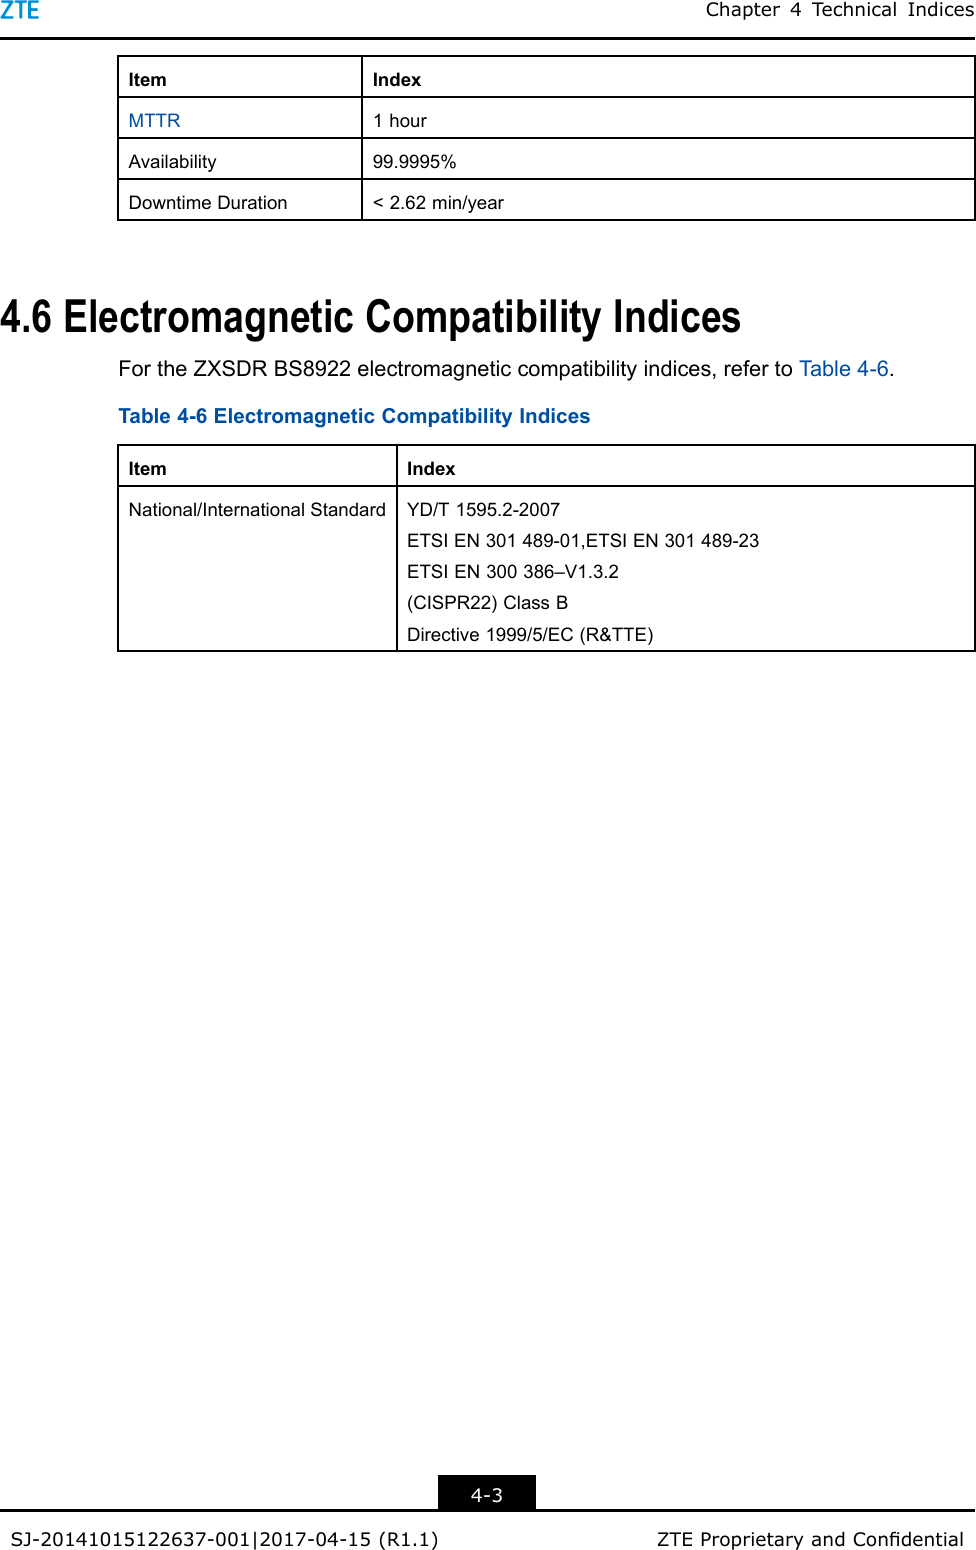 Chapter4T echnicalIndicesItemIndexMTTR1hourAvailability99.9995%DowntimeDuration&lt;2.62min/year4.6ElectromagneticCompatibilityIndicesFortheZXSDRBS8922electromagneticcompatibilityindices,refertoTable4-6.Table4-6ElectromagneticCompatibilityIndicesItemIndexNational/InternationalStandardYD/T1595.2-2007ETSIEN301489-01,ETSIEN301489-23ETSIEN300386–V1.3.2(CISPR22)ClassBDirective1999/5/EC(R&amp;TTE)4-3SJ-20141015122637-001|2017-04-15(R1.1)ZTEProprietaryandCondential